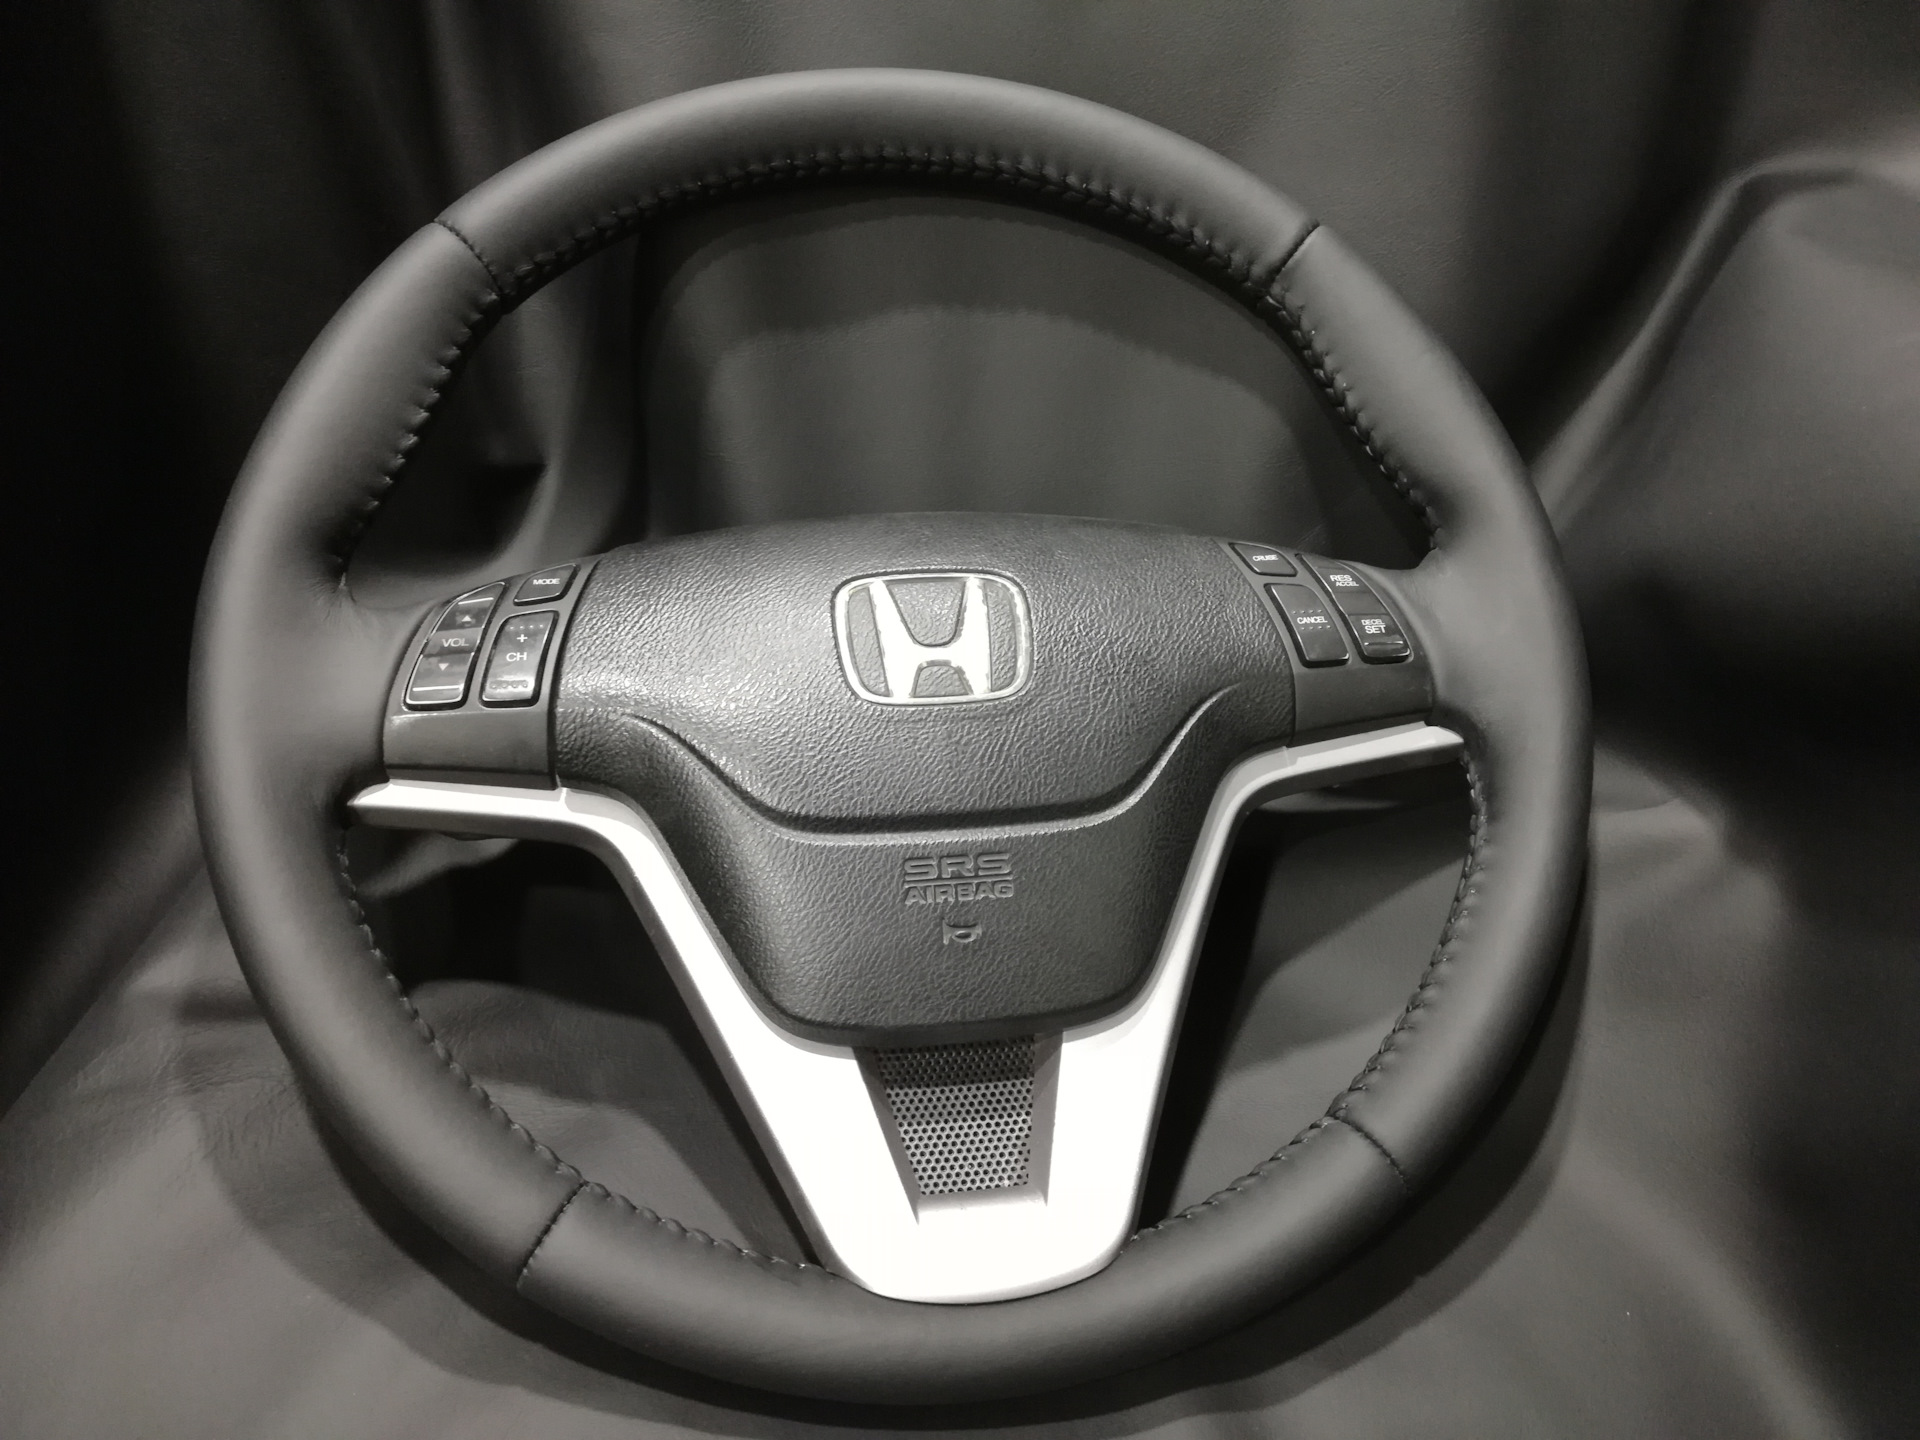 Honda crv руль. Руль Хонда CRV. Руль Хонда стрим. Кожаный руль Honda CRV. Руль Honda 2020 drive2.